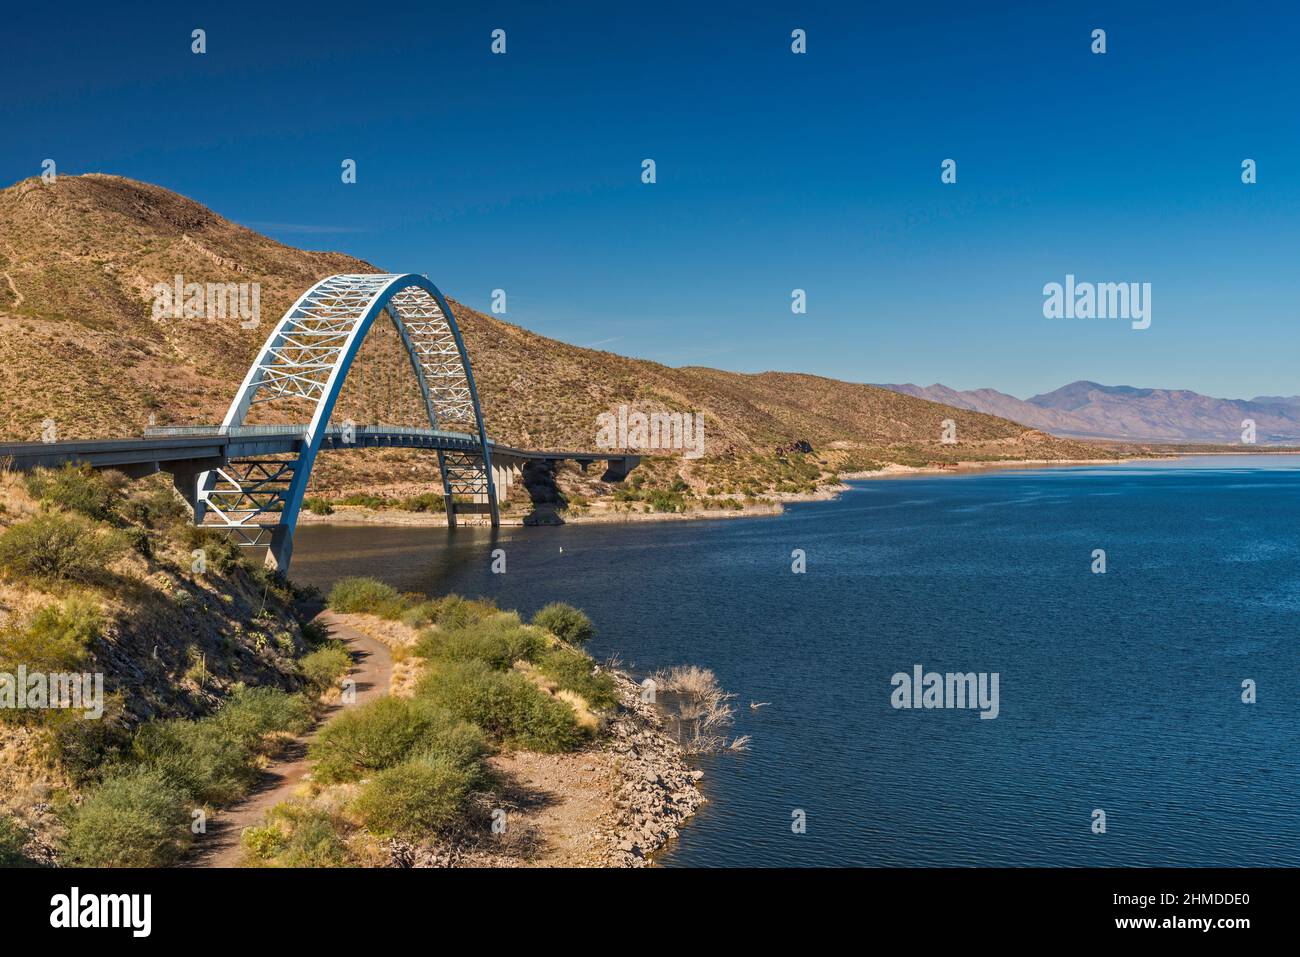 Arch bridge on Highway 188 over Theodore Roosevelt Lake, near Theodore Roosevelt Dam, Arizona, USA Stock Photo